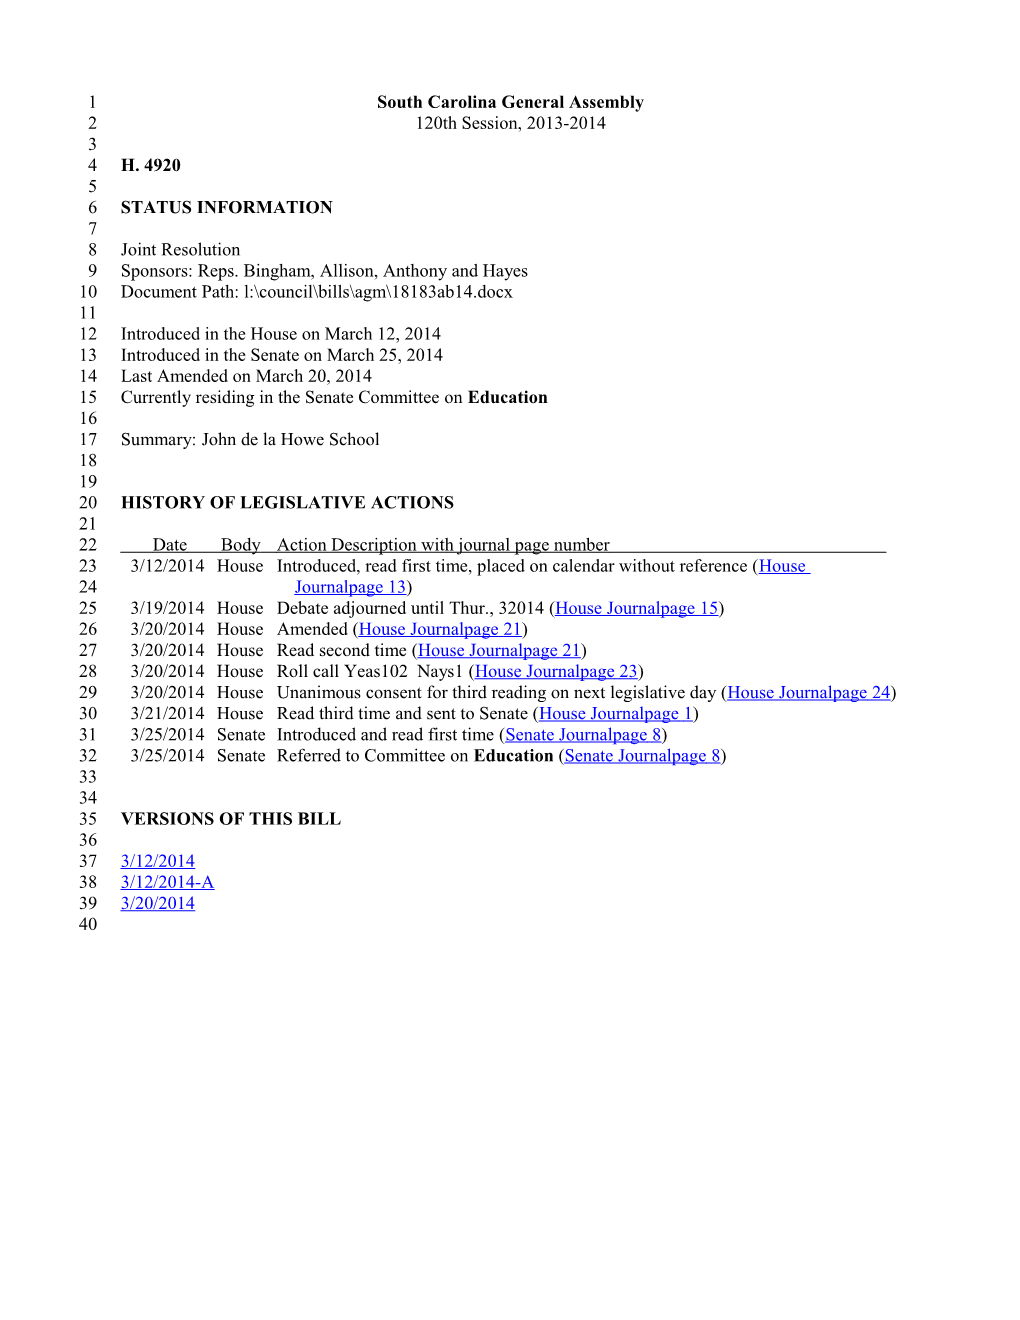 2013-2014 Bill 4920: John De La Howe School - South Carolina Legislature Online